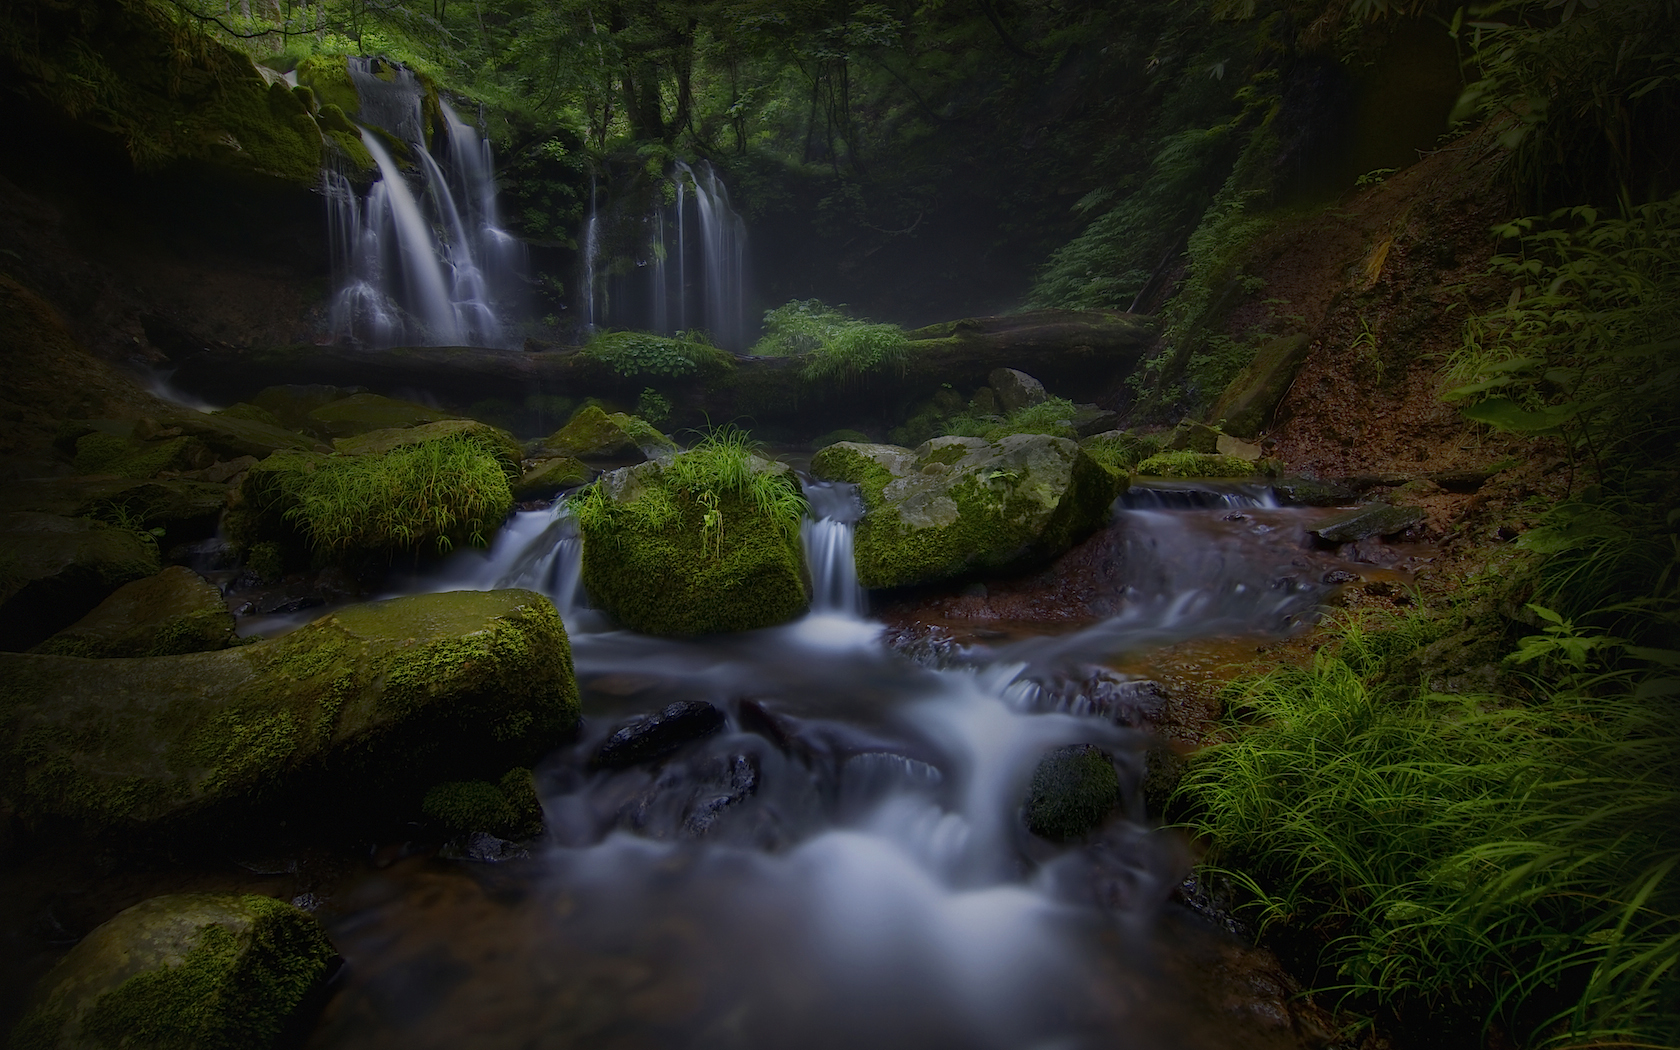 Descarga gratis la imagen Cascadas, Oscuro, Cascada, Bosque, Árbol, Tierra/naturaleza en el escritorio de tu PC